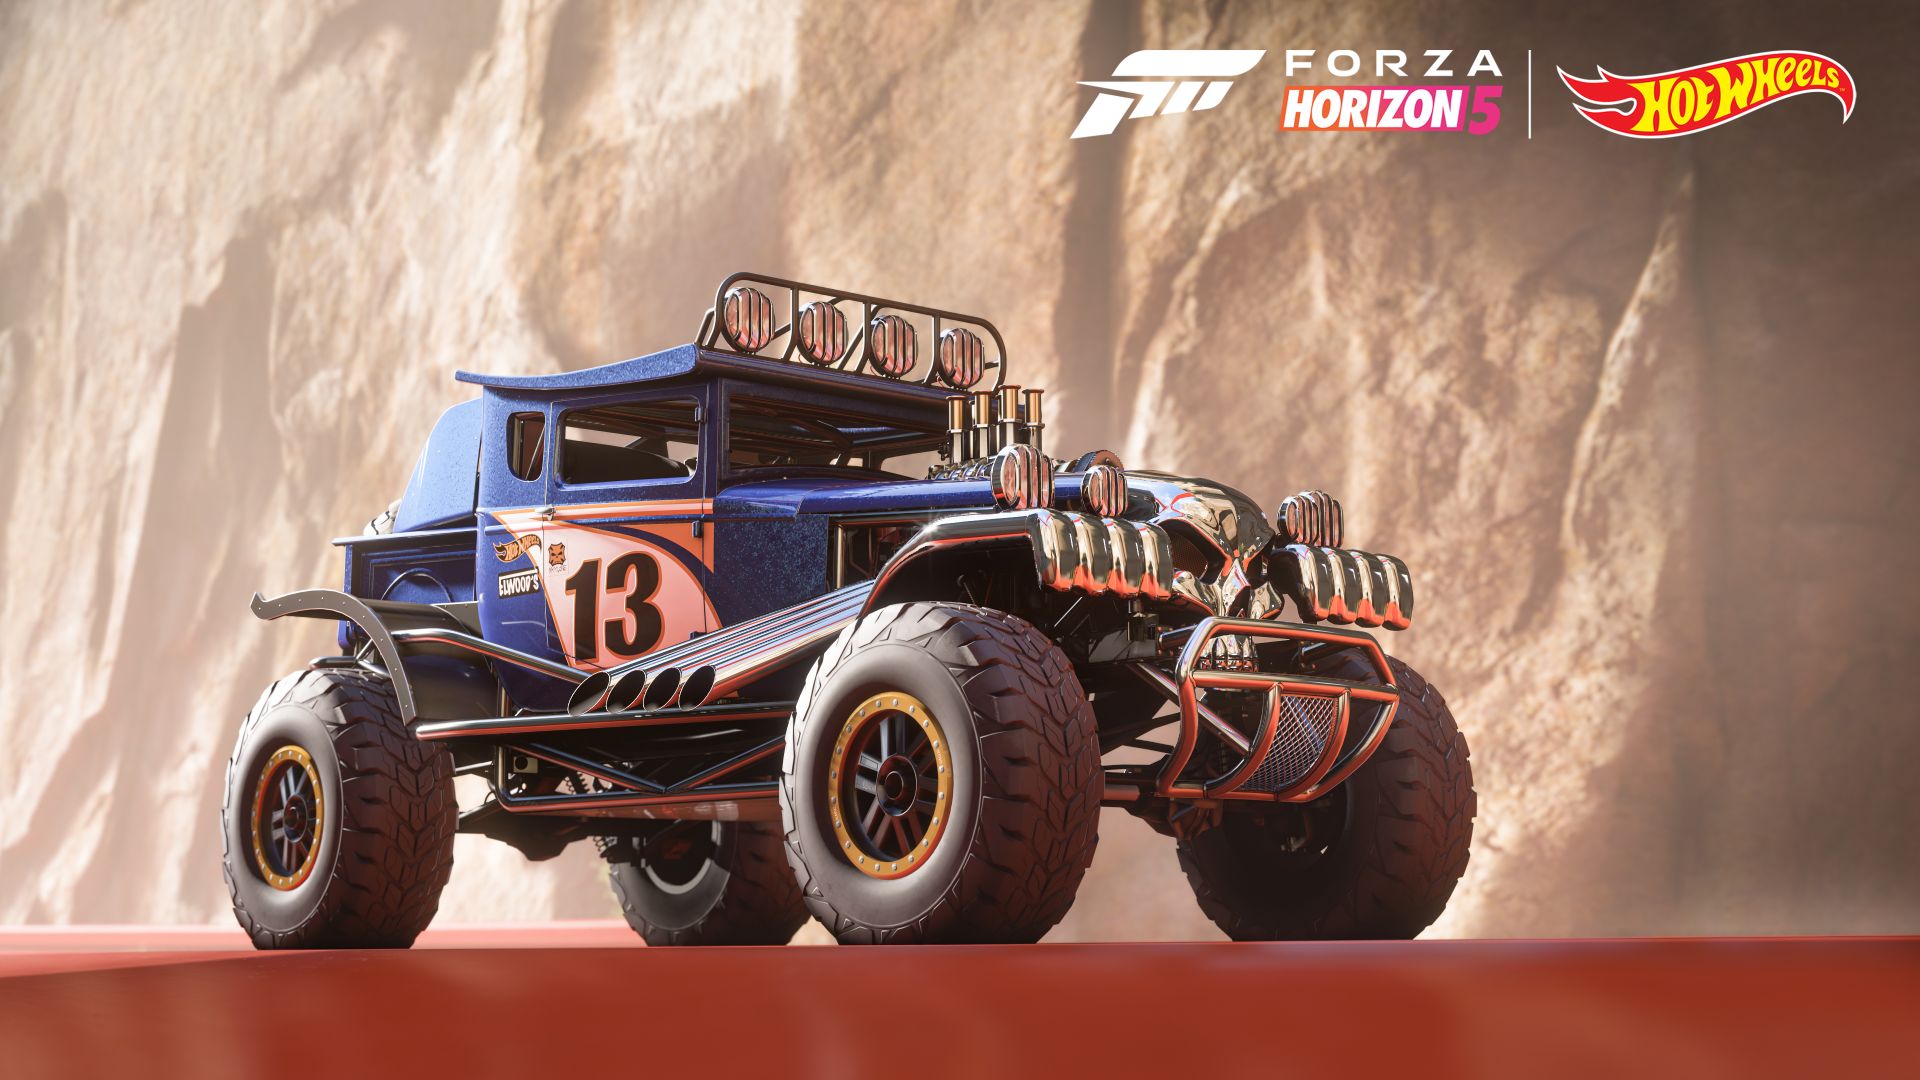 Das Forza Horizon 5: Hot Wheels DLC ist ab sofort verfügbar